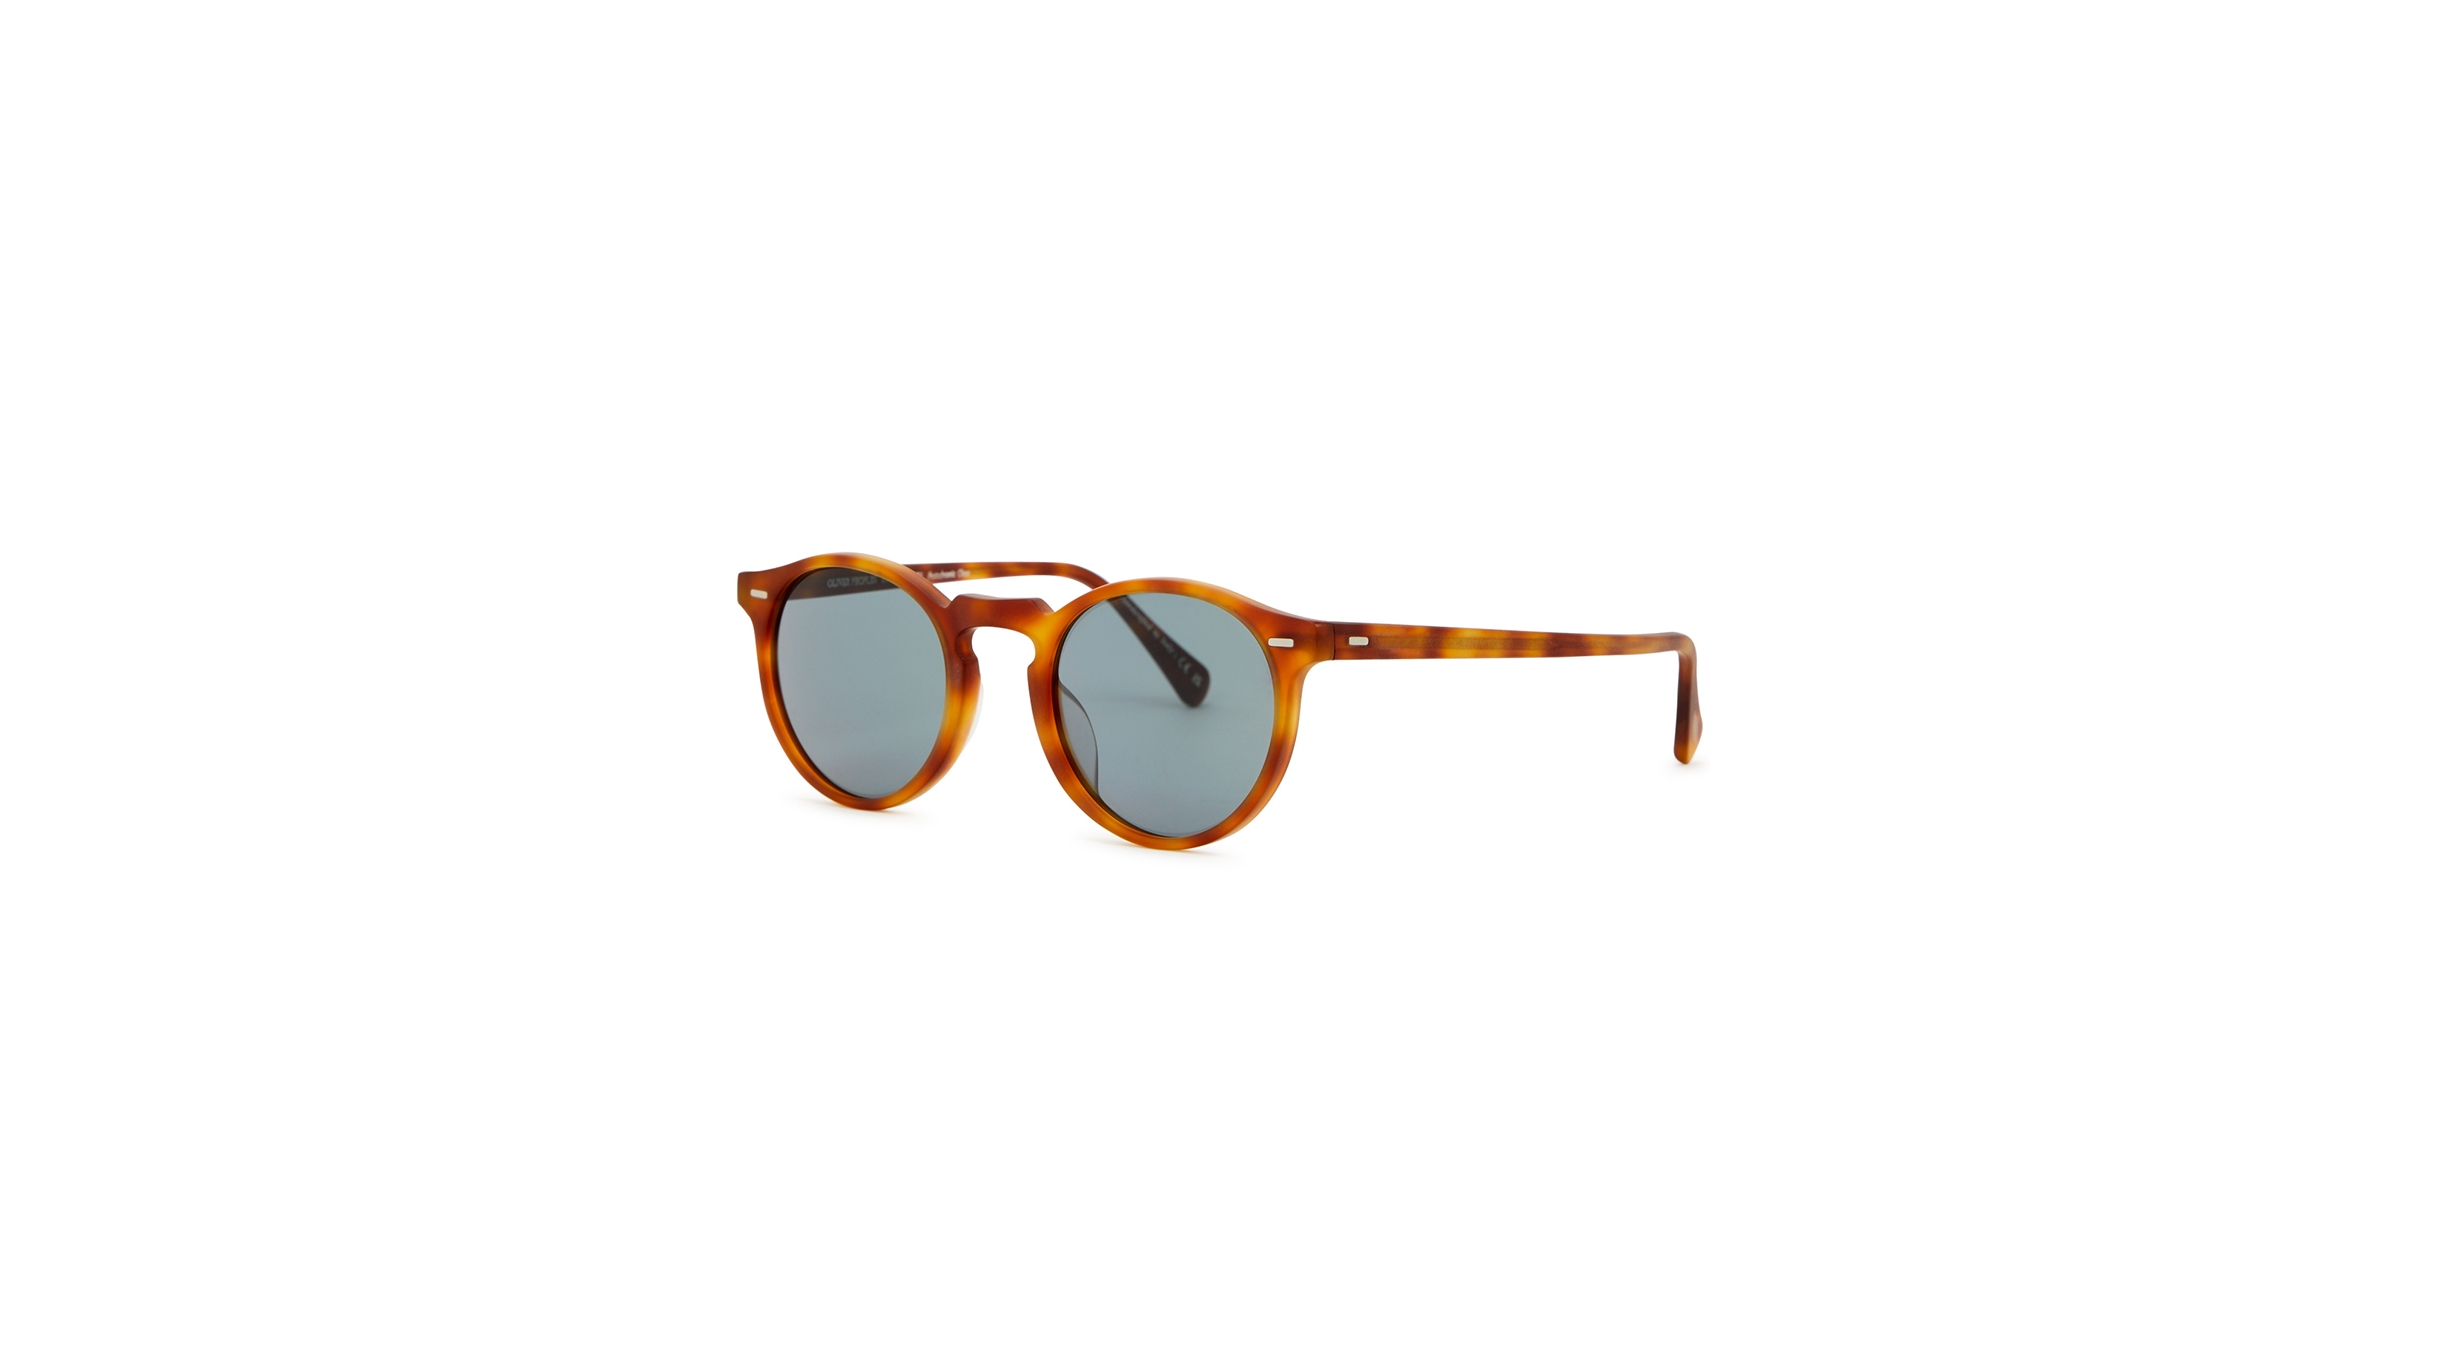 Oliver Peoples Gregory Peck round-frame sunglasses - Harvey Nichols